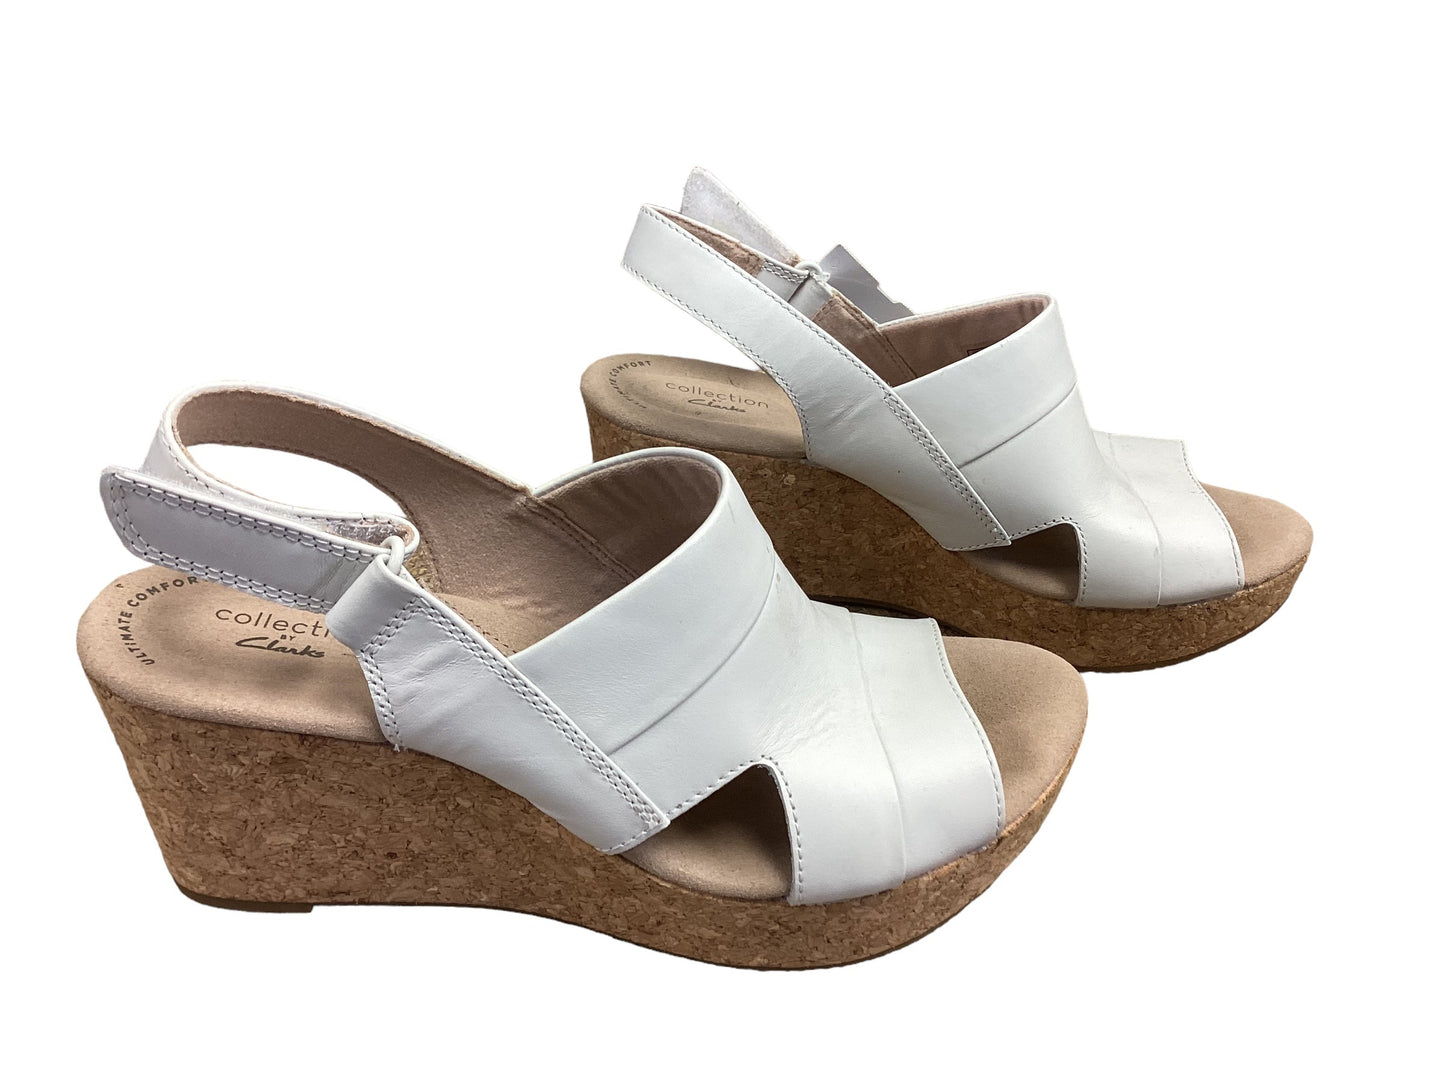 White Sandals Heels Wedge Clarks, Size 8.5